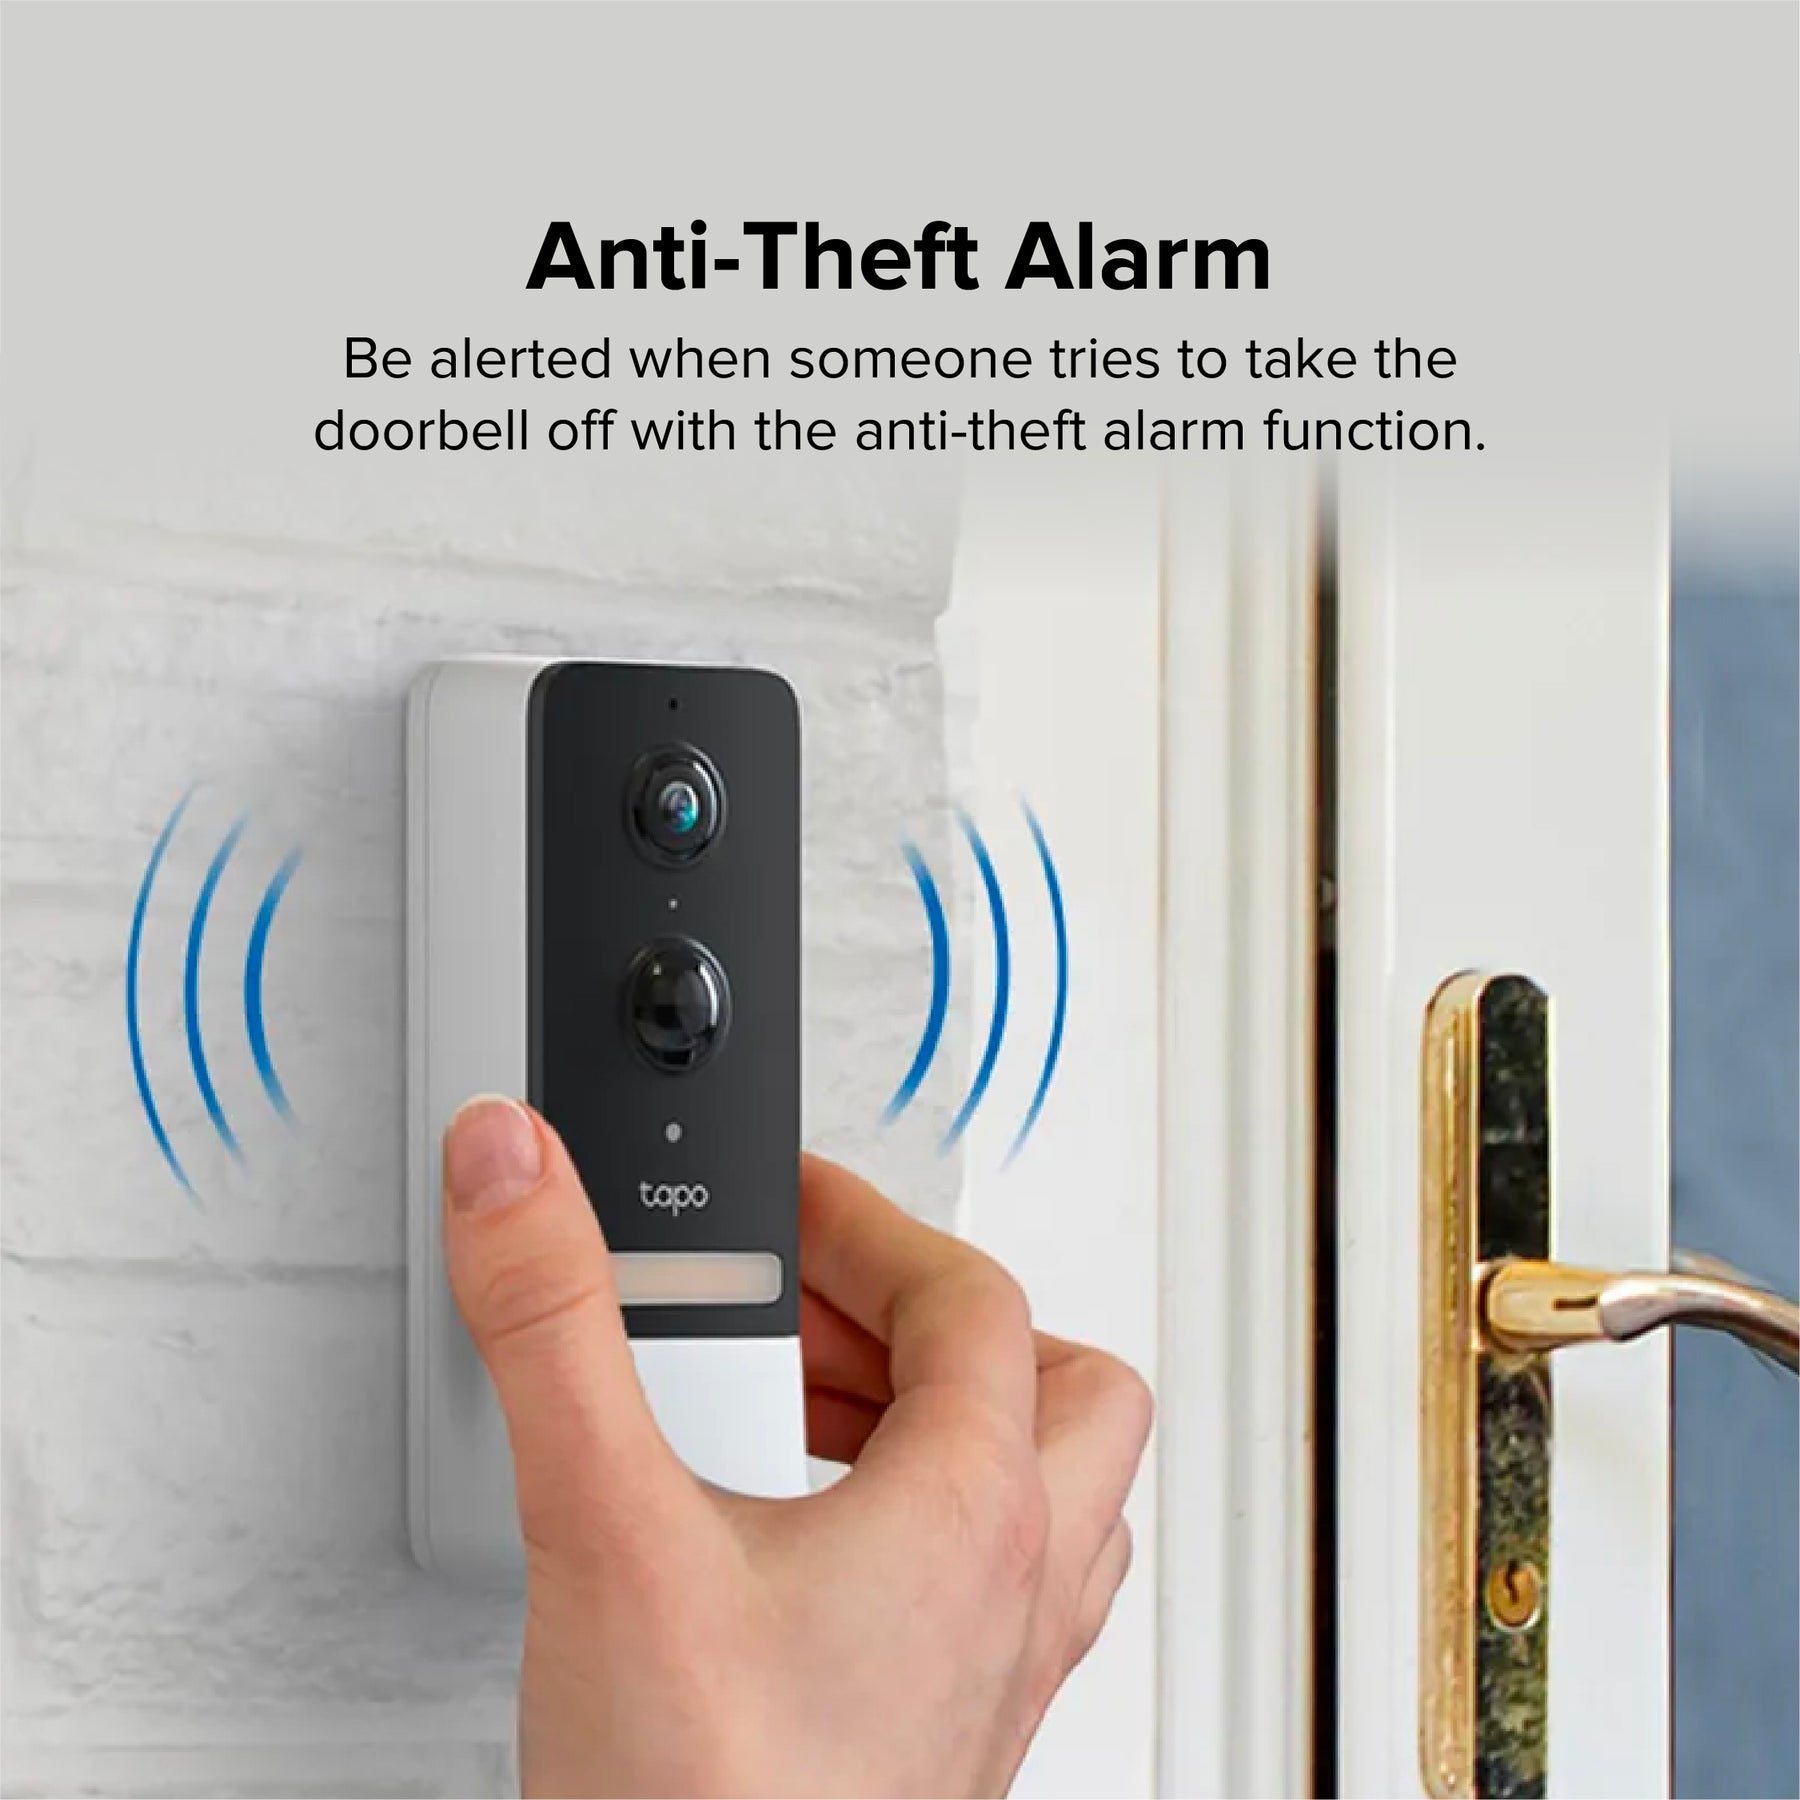 TP-Link Tapo Smart Doorbell D230S1 + Tapo C420S2 - Coolblue